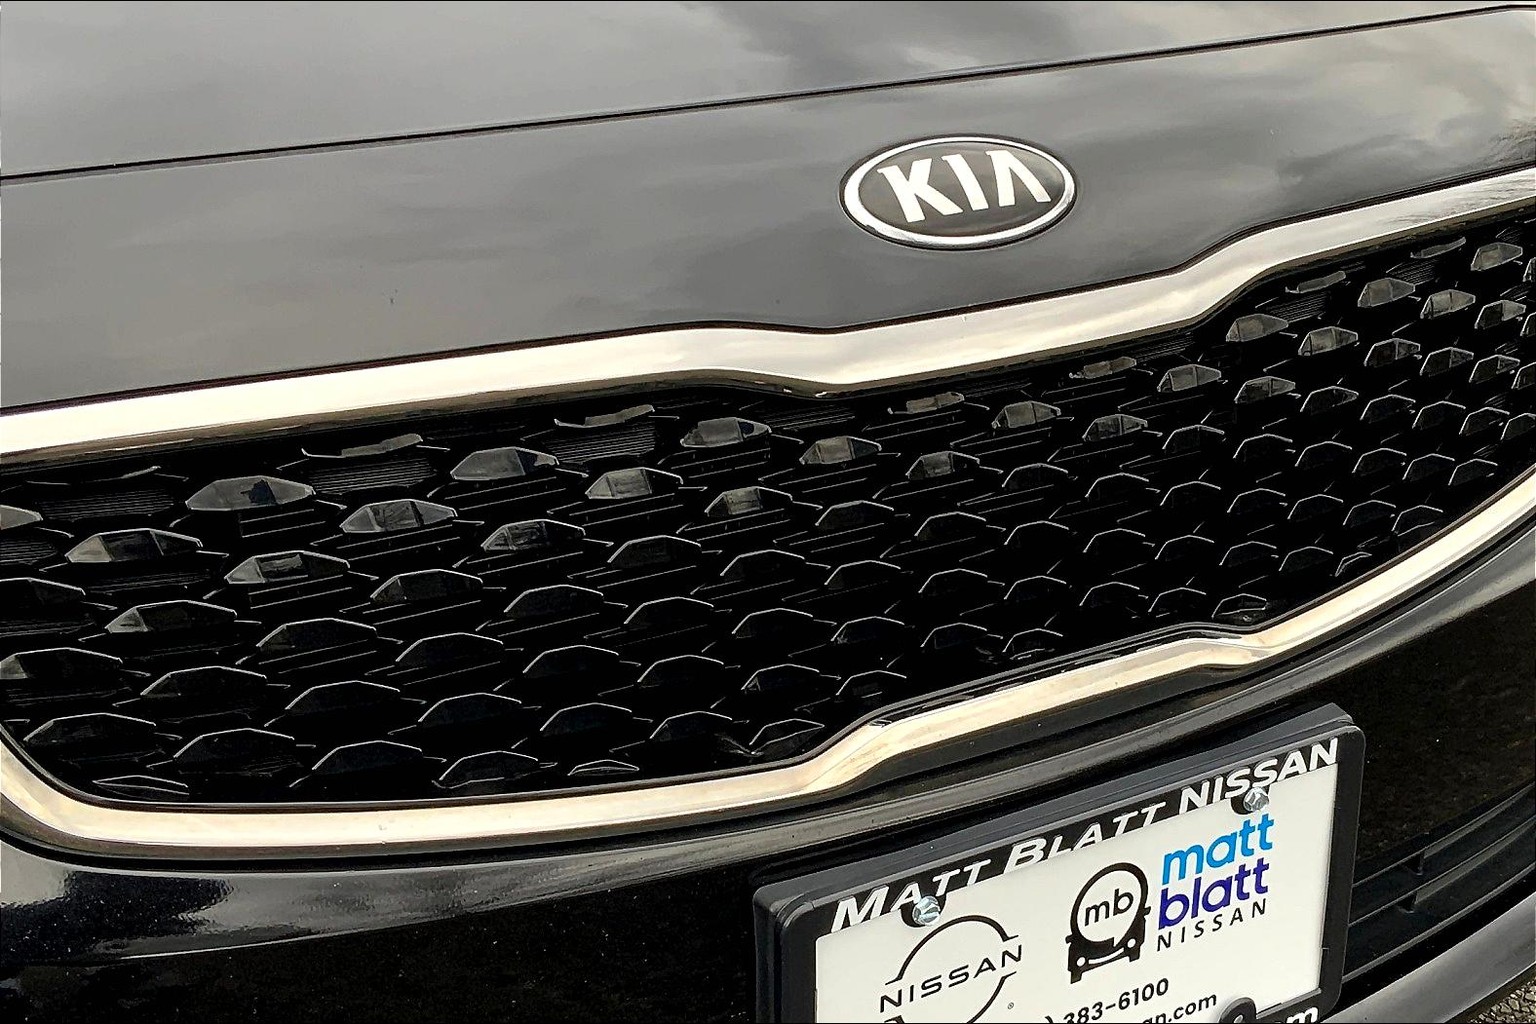 Kia Emblem License Plate - Aluminum Novelty License Plate